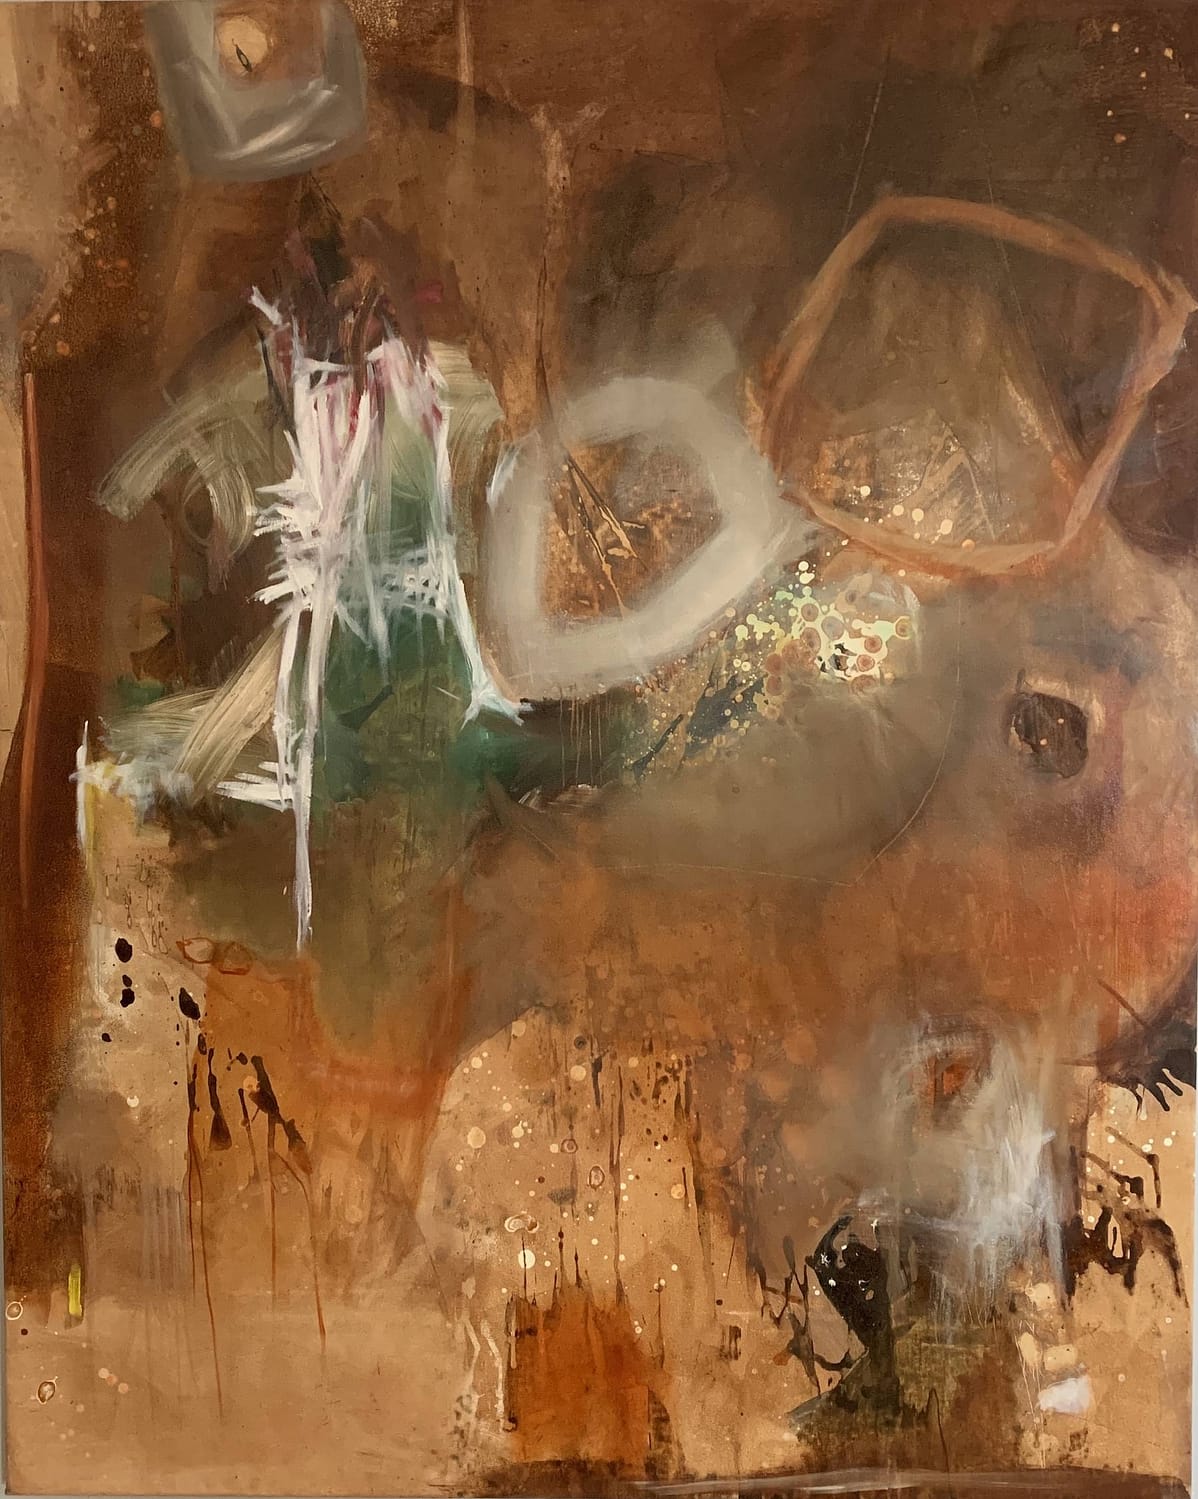 Bos Wadi Nik Artists Nicola Barth Painting Fabled Gallery https://fabledgallery.art/product/bos-wadi-nik/